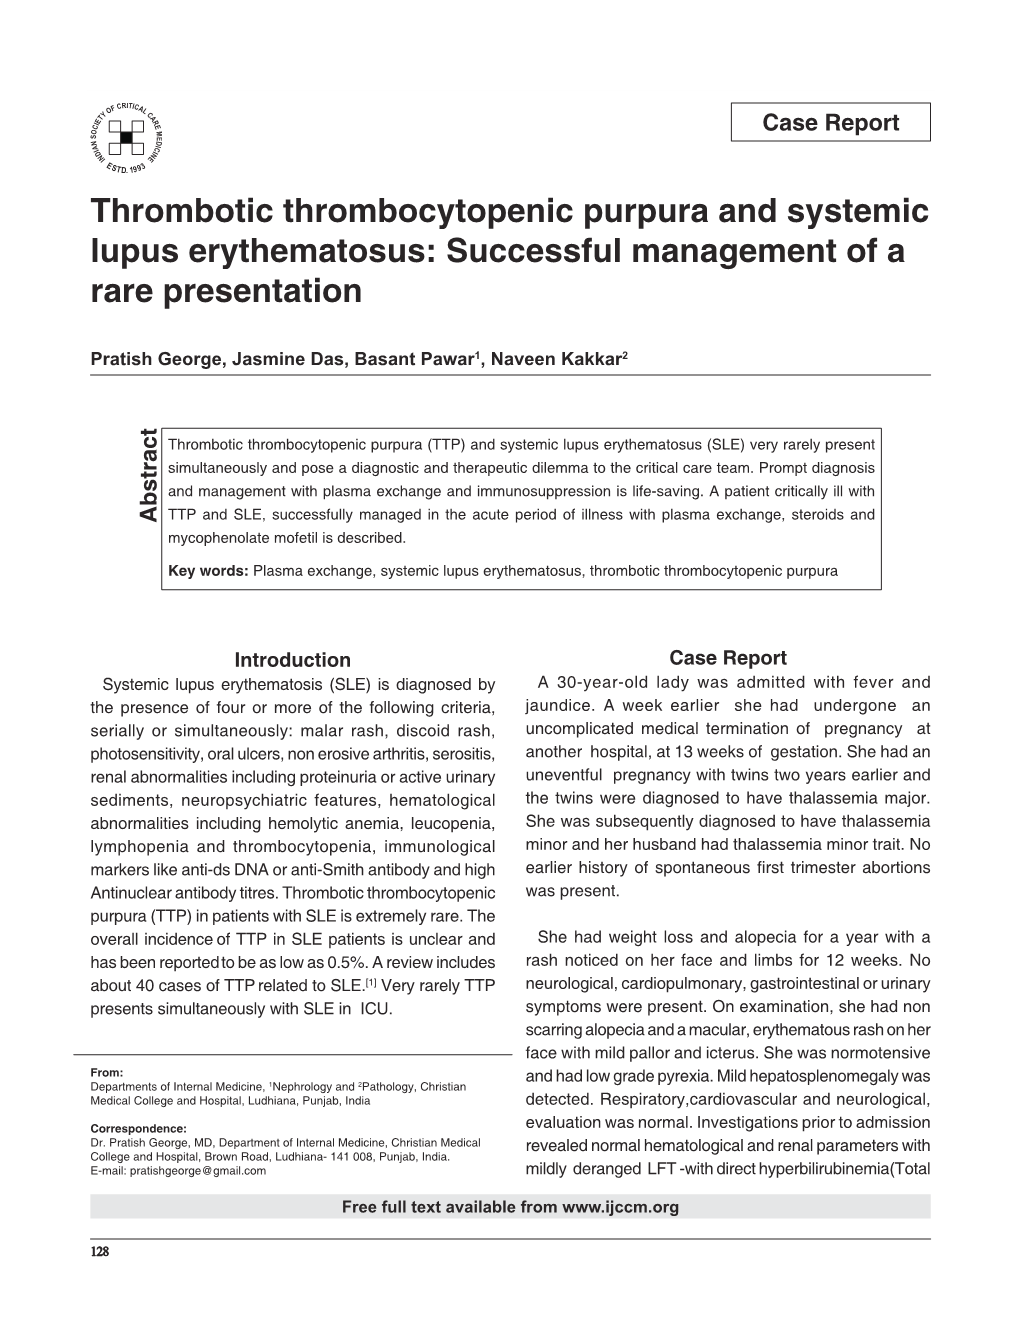 Thrombotic Thrombocytopenic Purpura and Systemic Lupus Erythematosus: Successful Management of a Rare Presentation